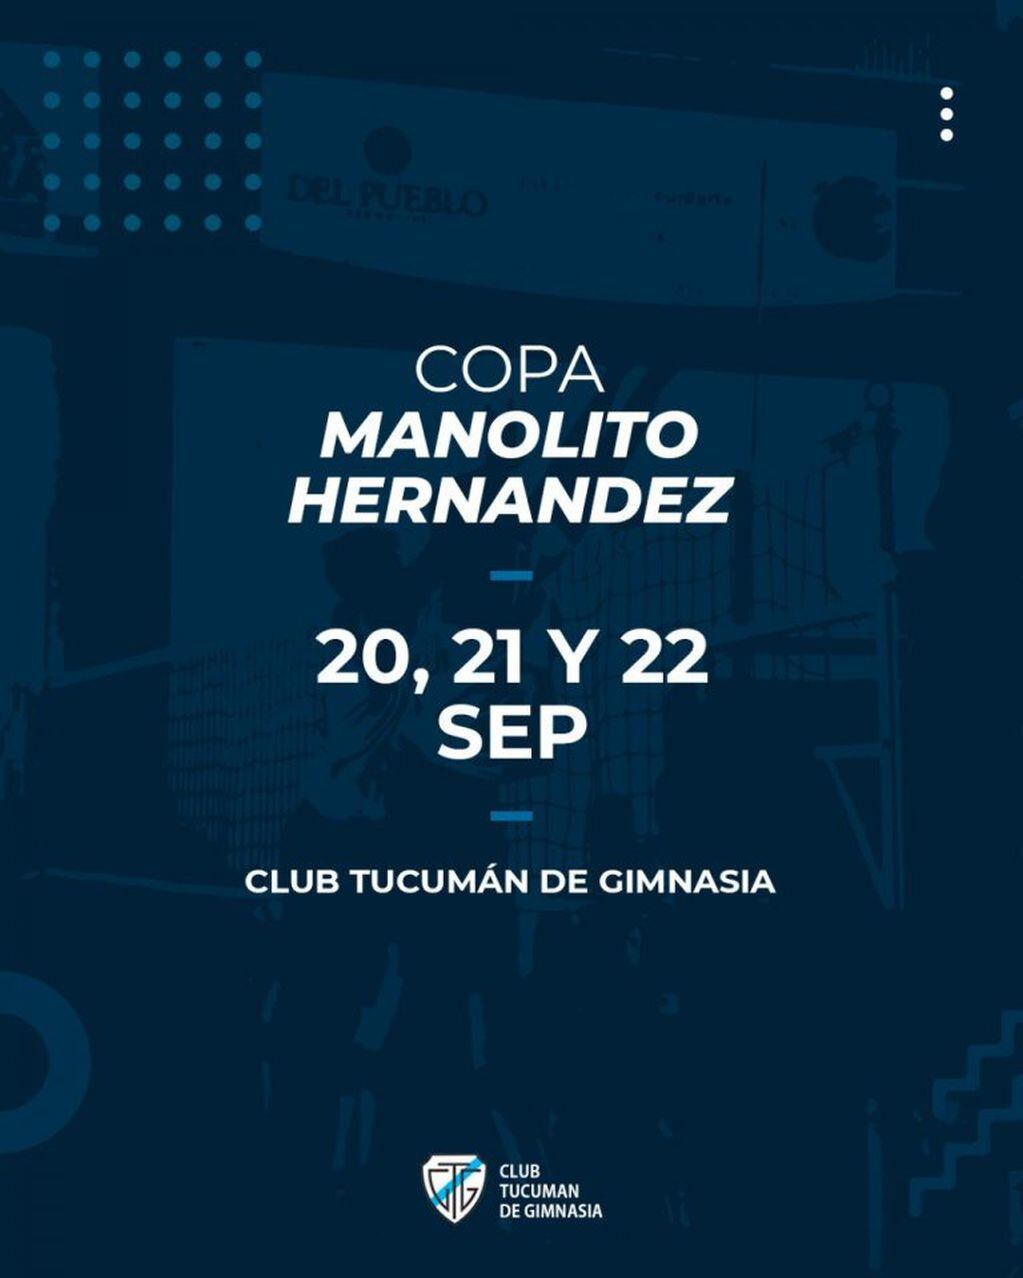 Club Tucumán de Gimnasia.